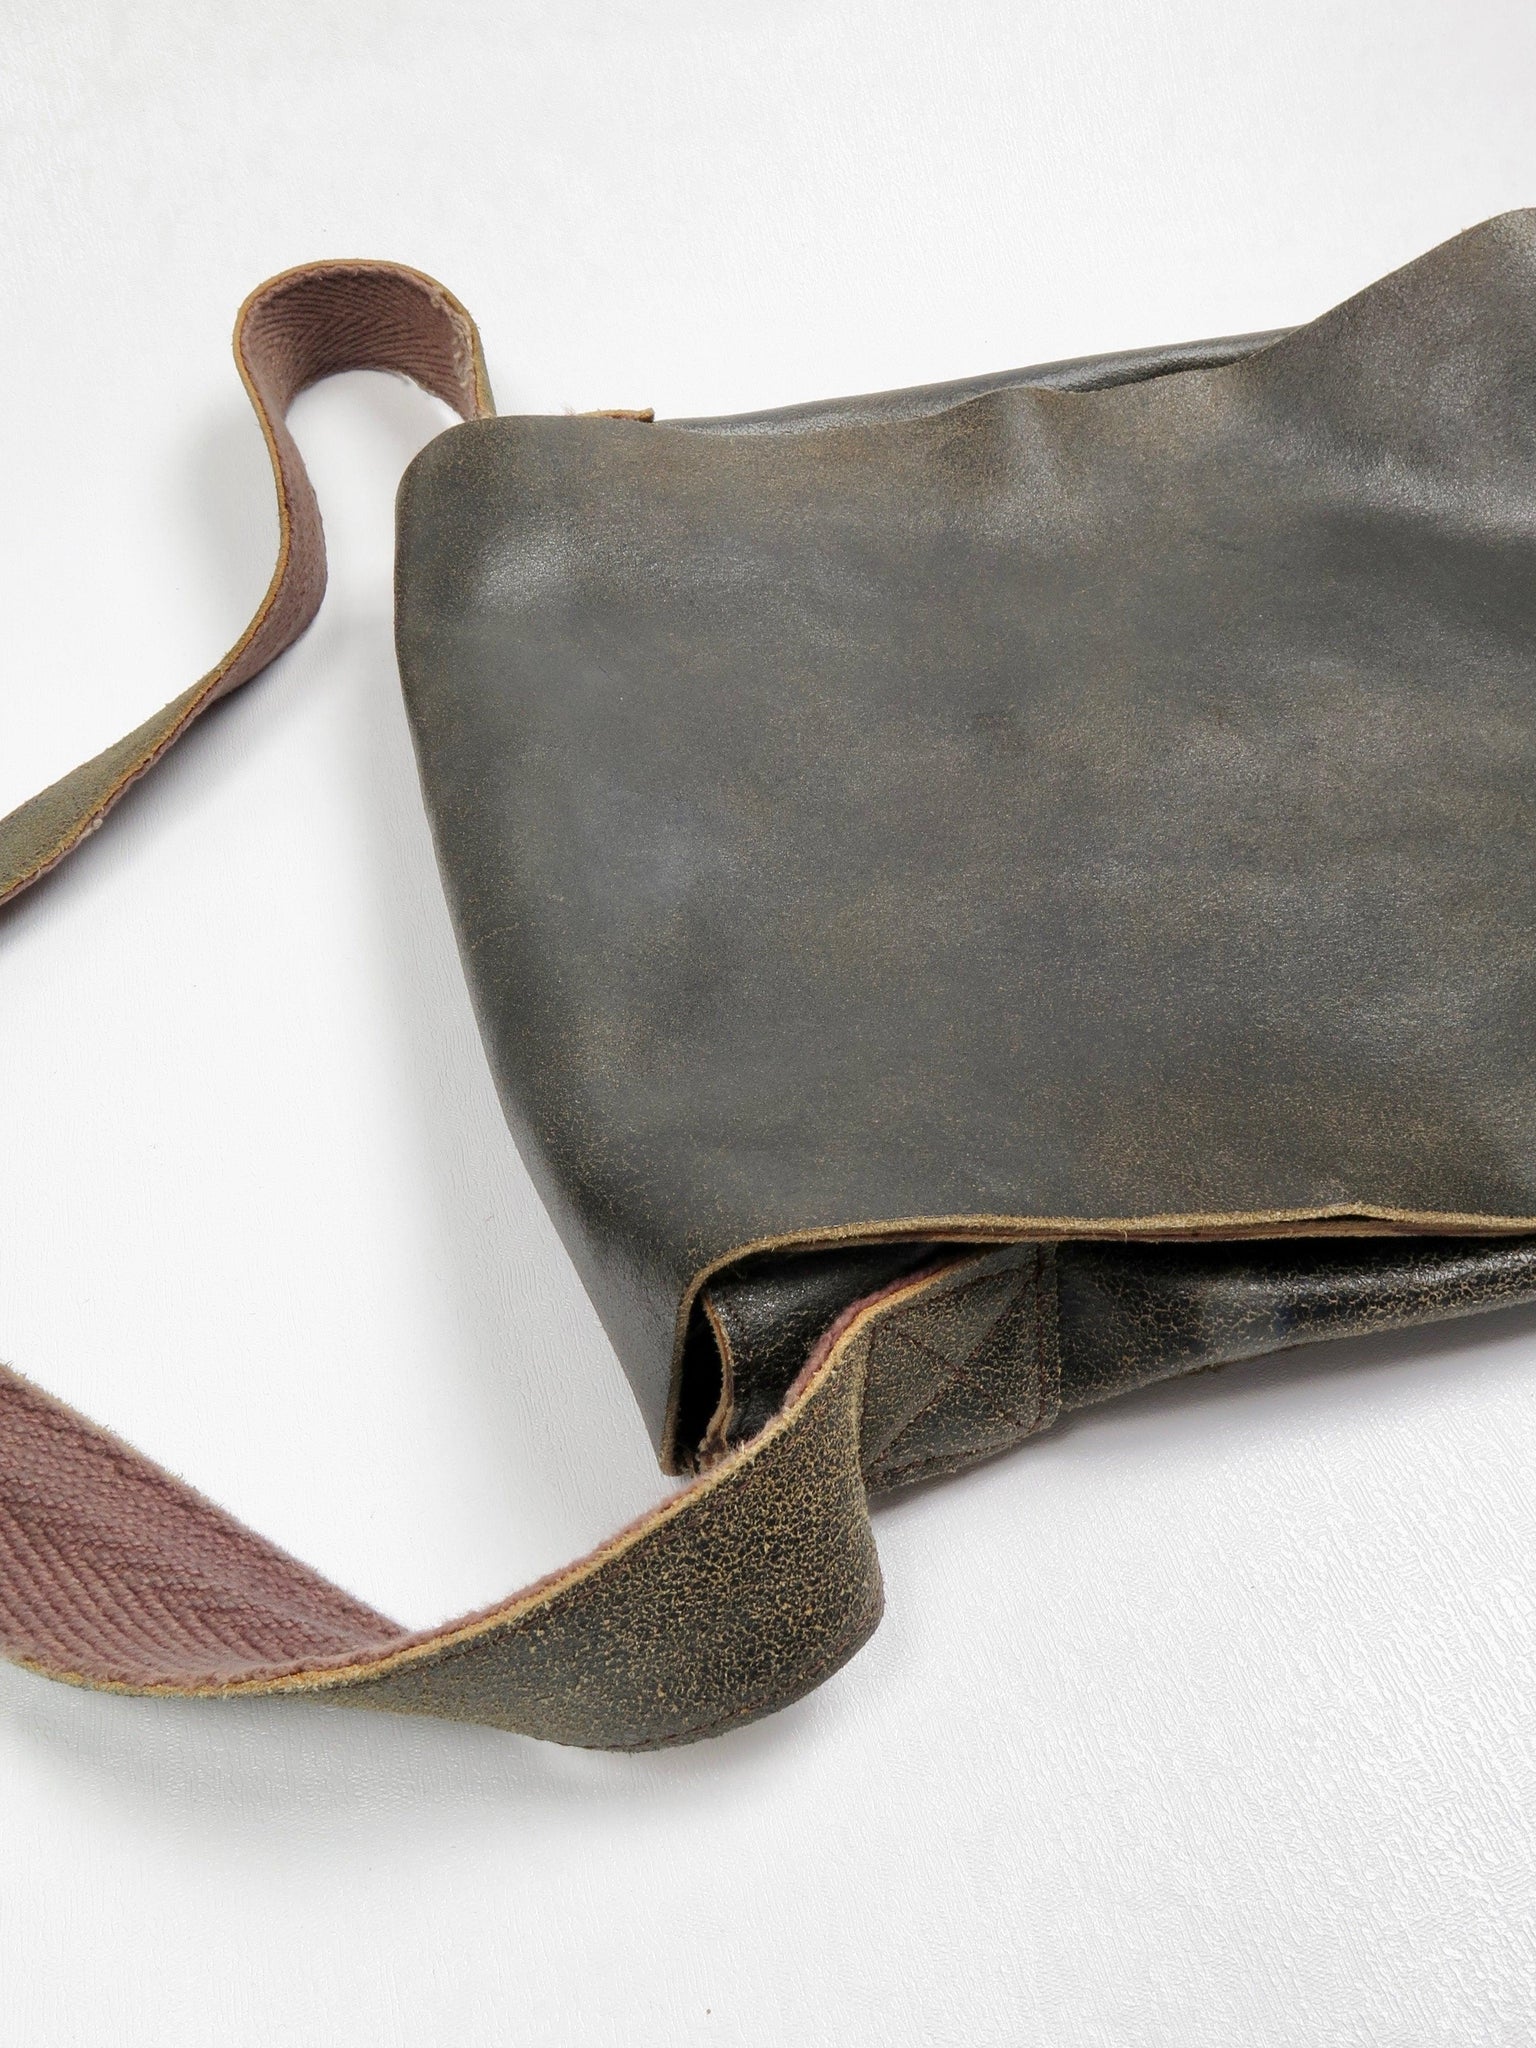 Brown Leather Messenger Bag - The Harlequin